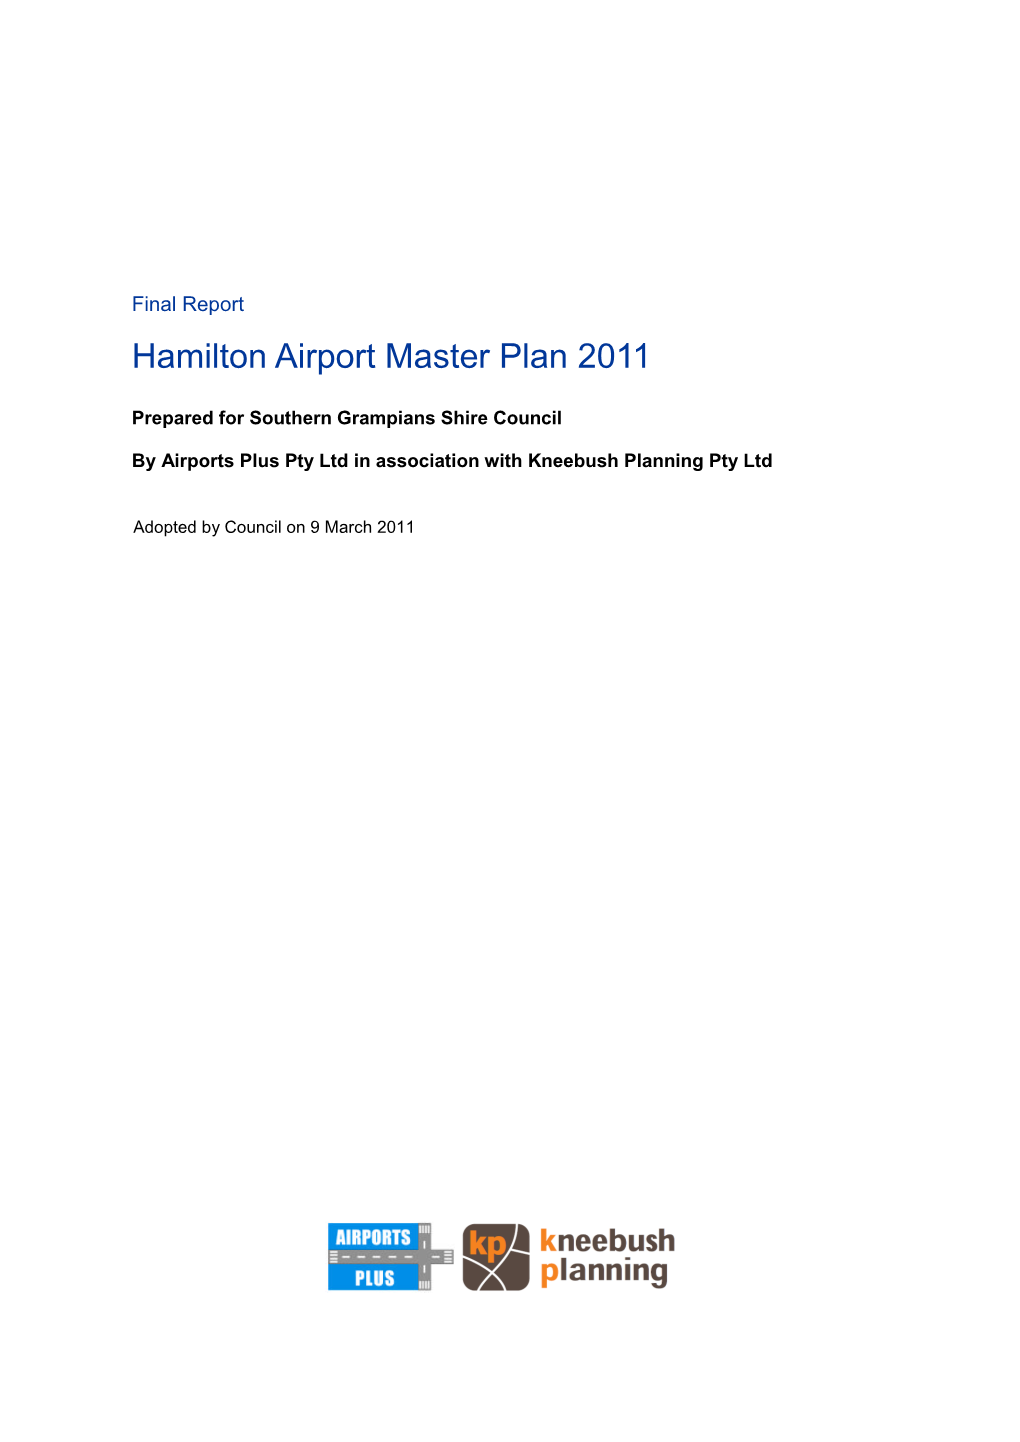 Hamilton Airport Master Plan 2011